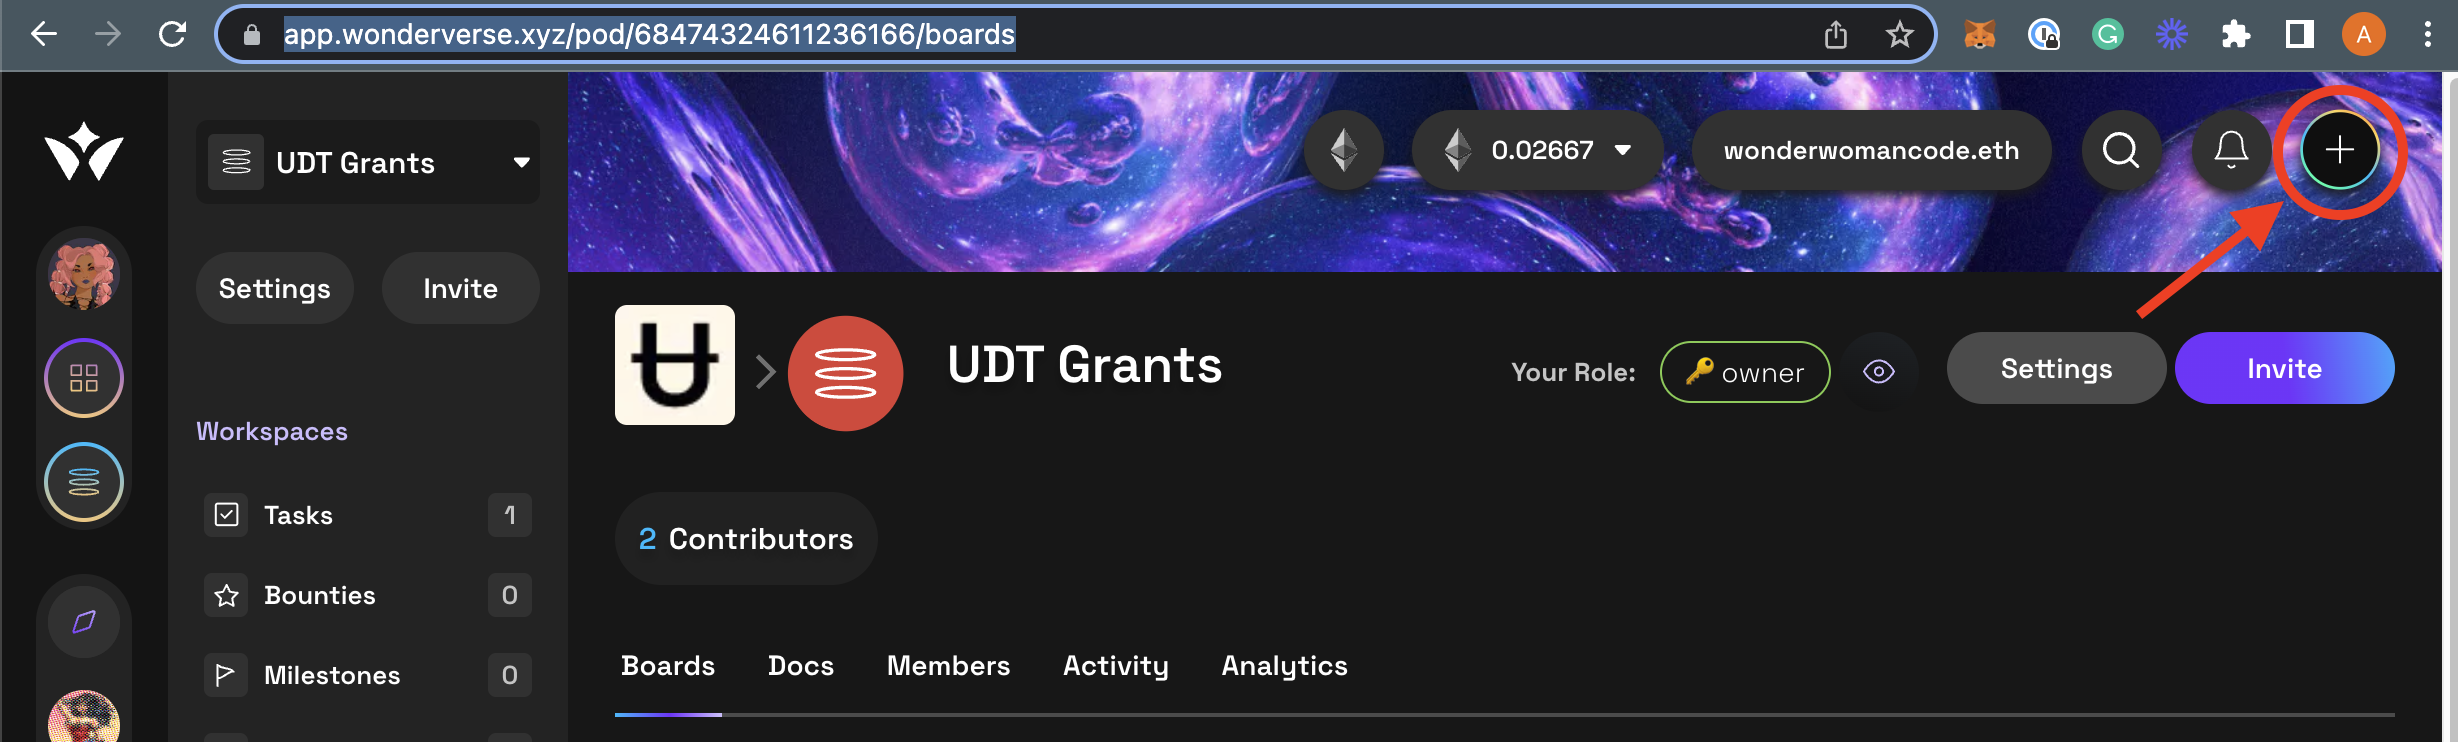 grant committee application wonderverse screenshot